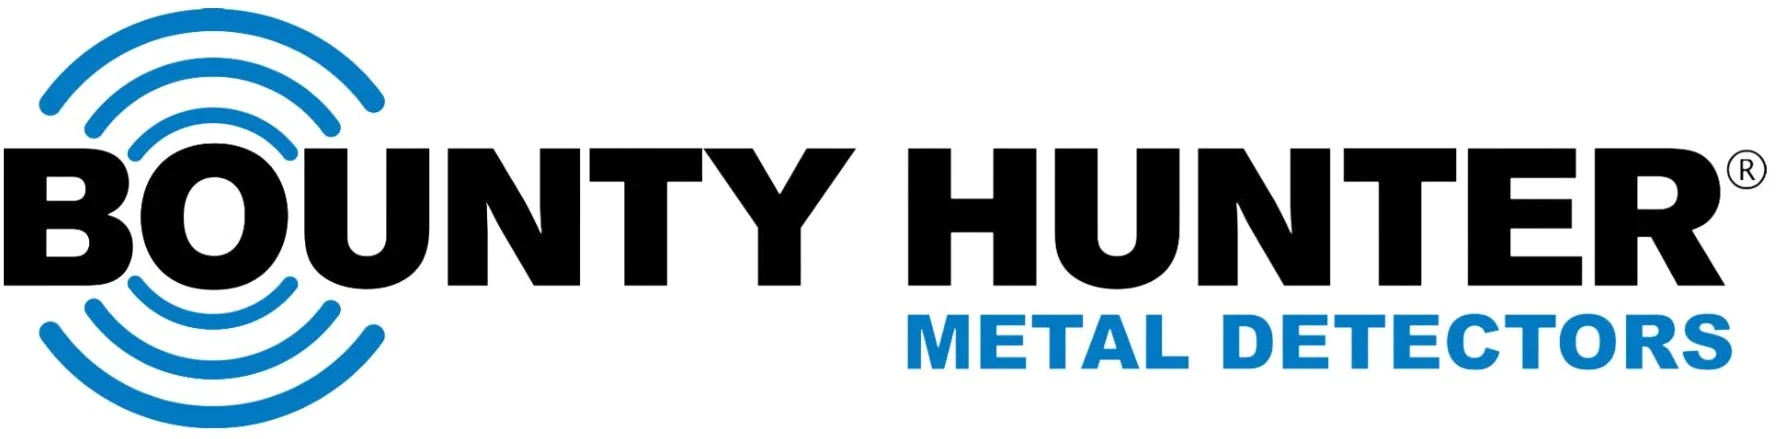 bounty hunter metal detector logo